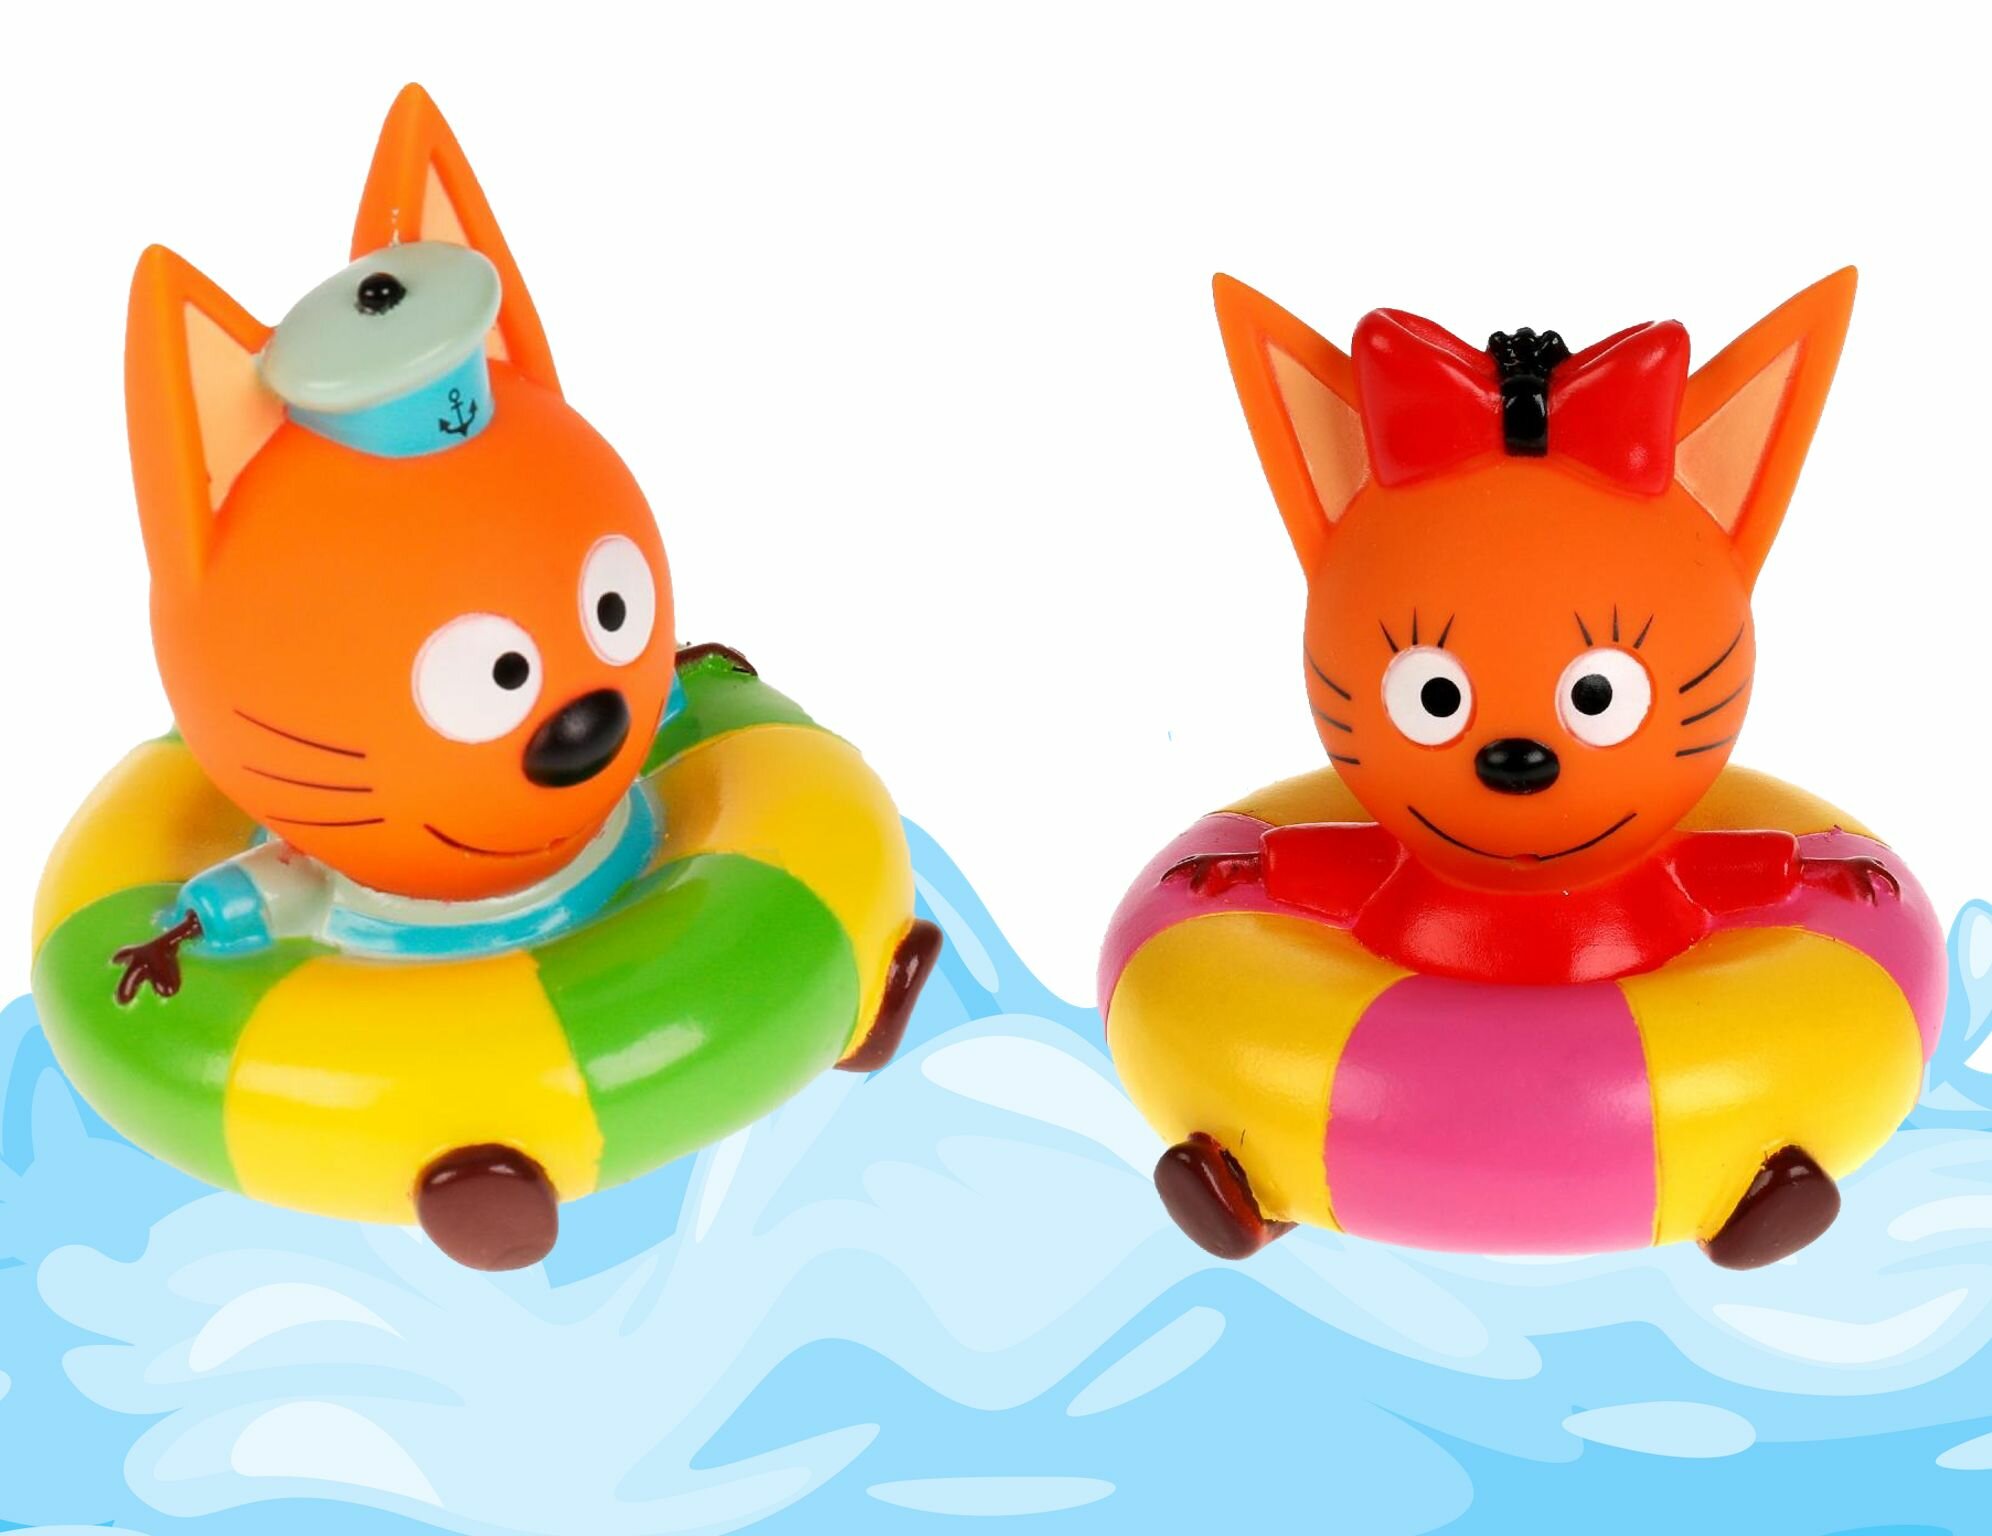 Набор игрушек для купания Три Кота: Коржик и Карамелька на круге